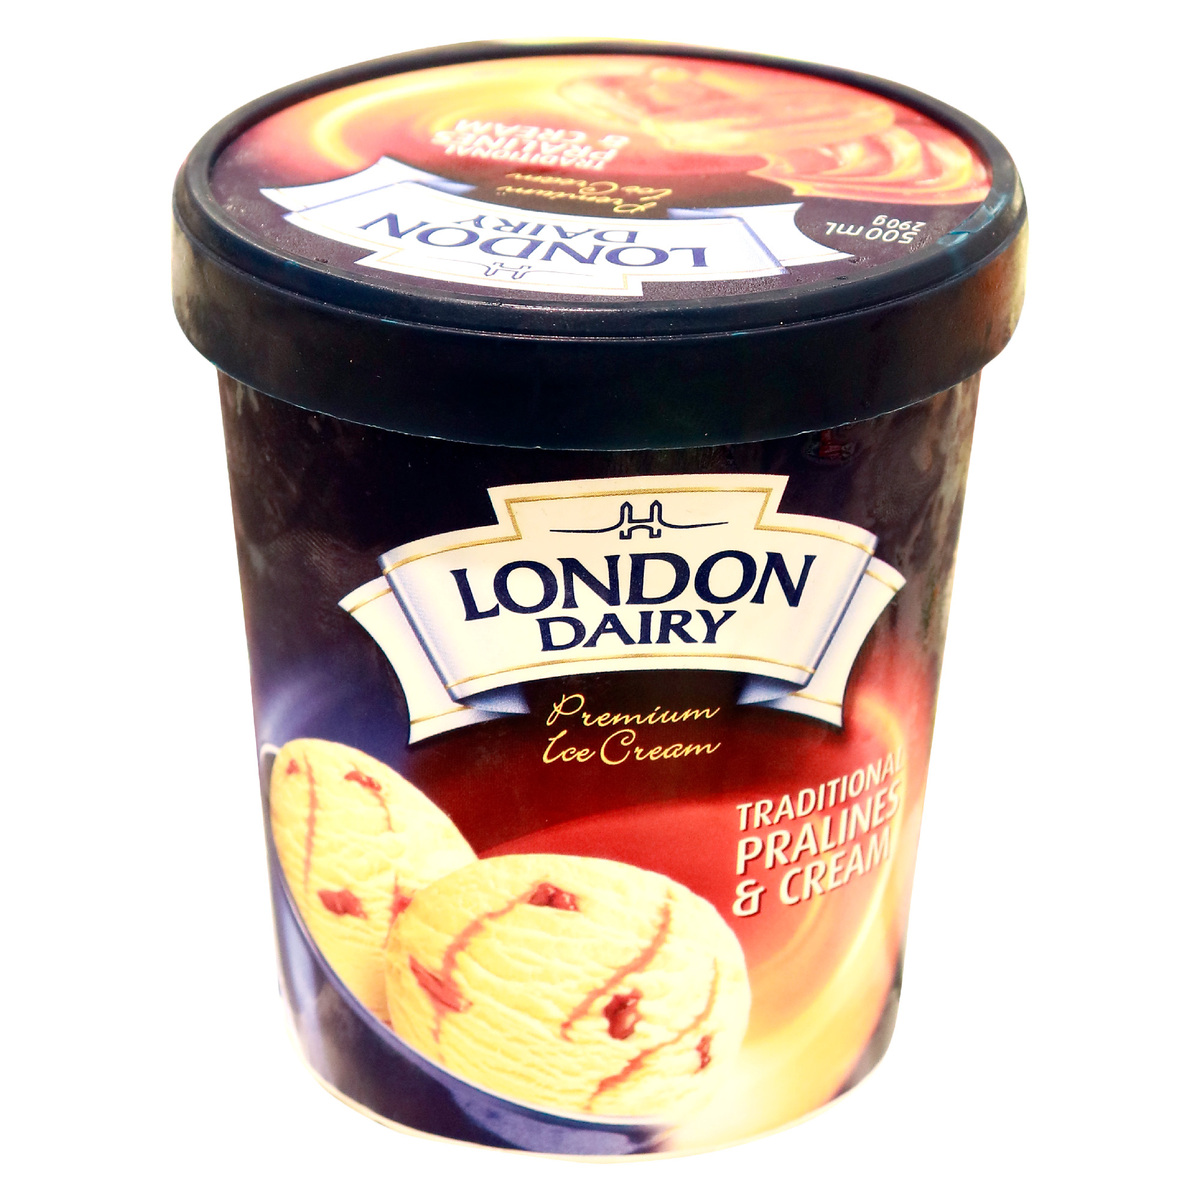 London Dairy Ice Cream Premium Traditional Pralines & Cream 500ml